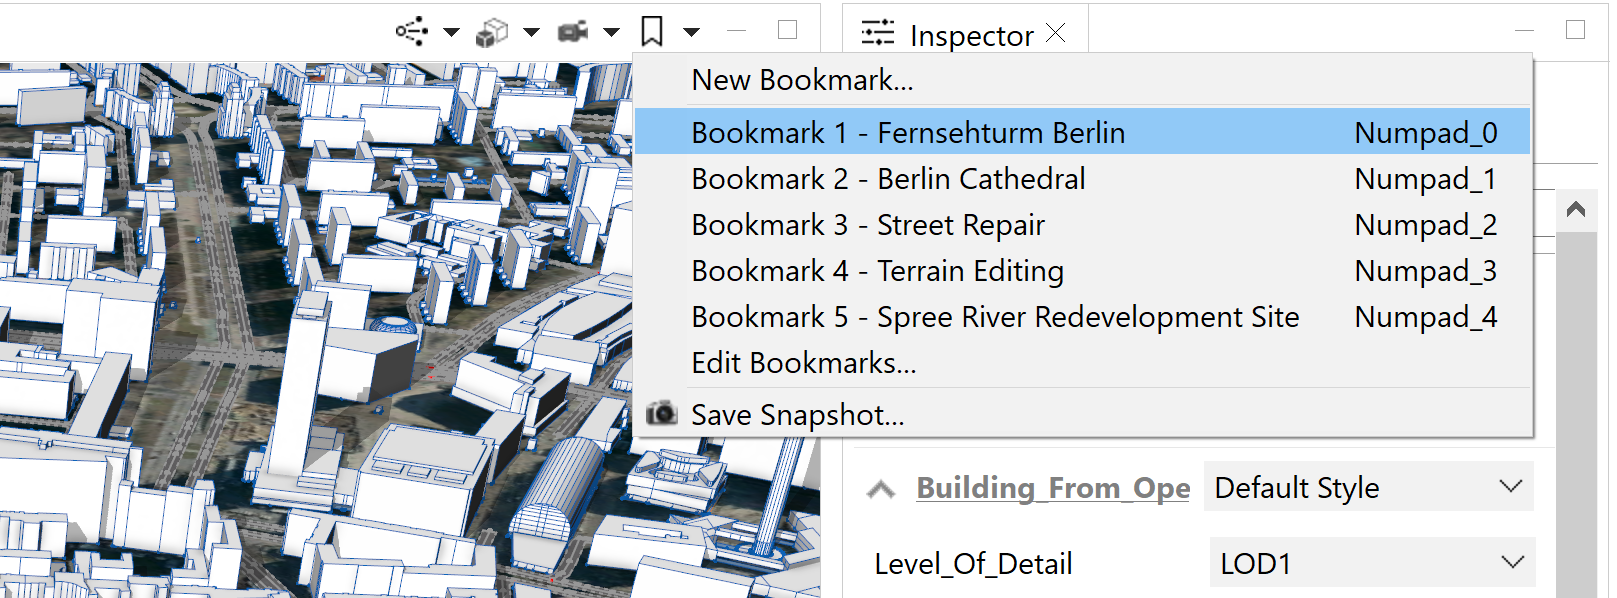 Bookmark 1 - Fernsehturm Berlin